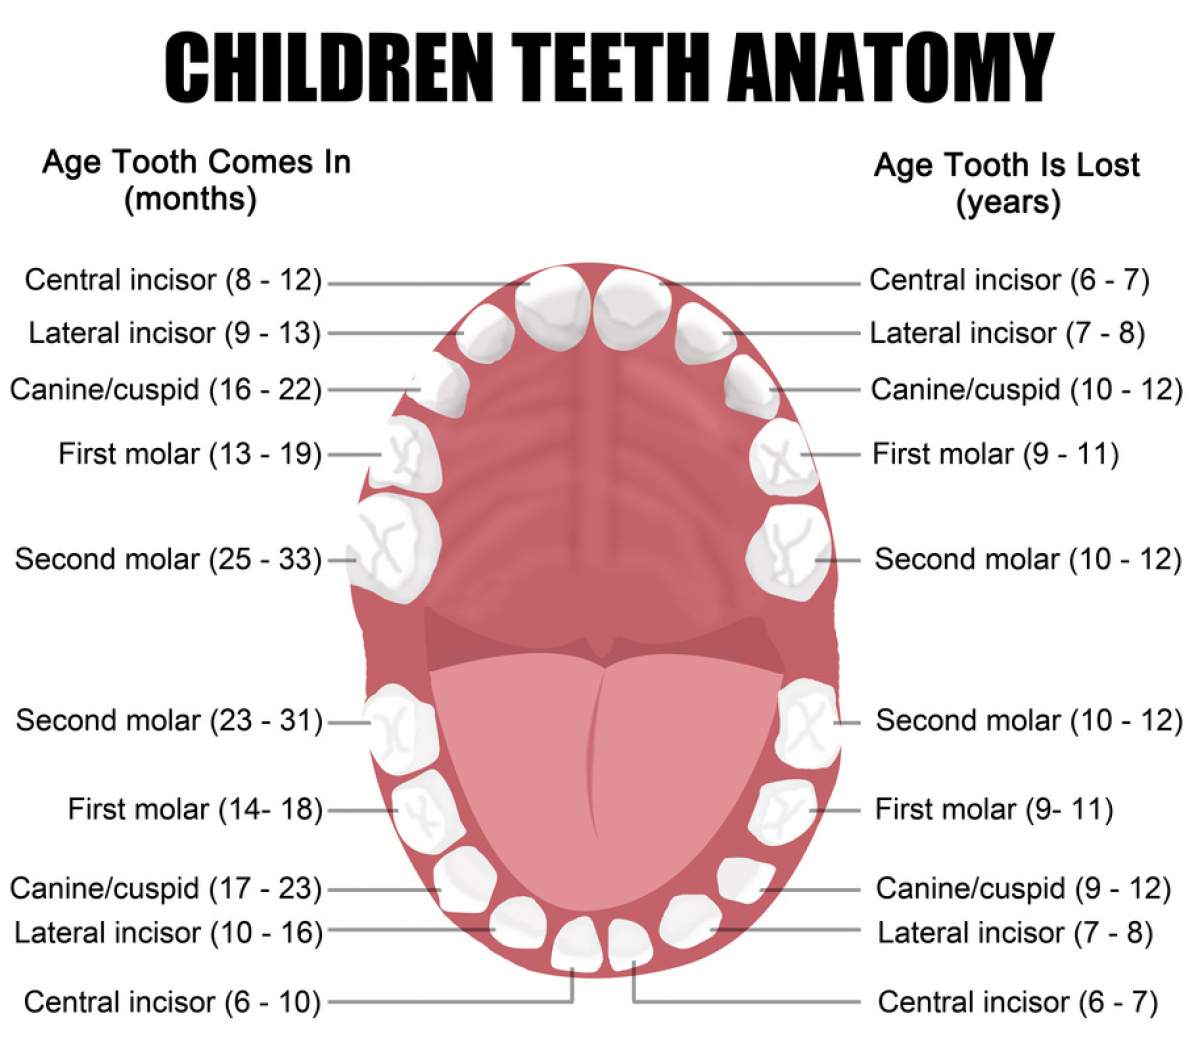 کلینیک دندانپزشکی آرکا - دندانپزشکی کودکان - رویش دندانهای شیری